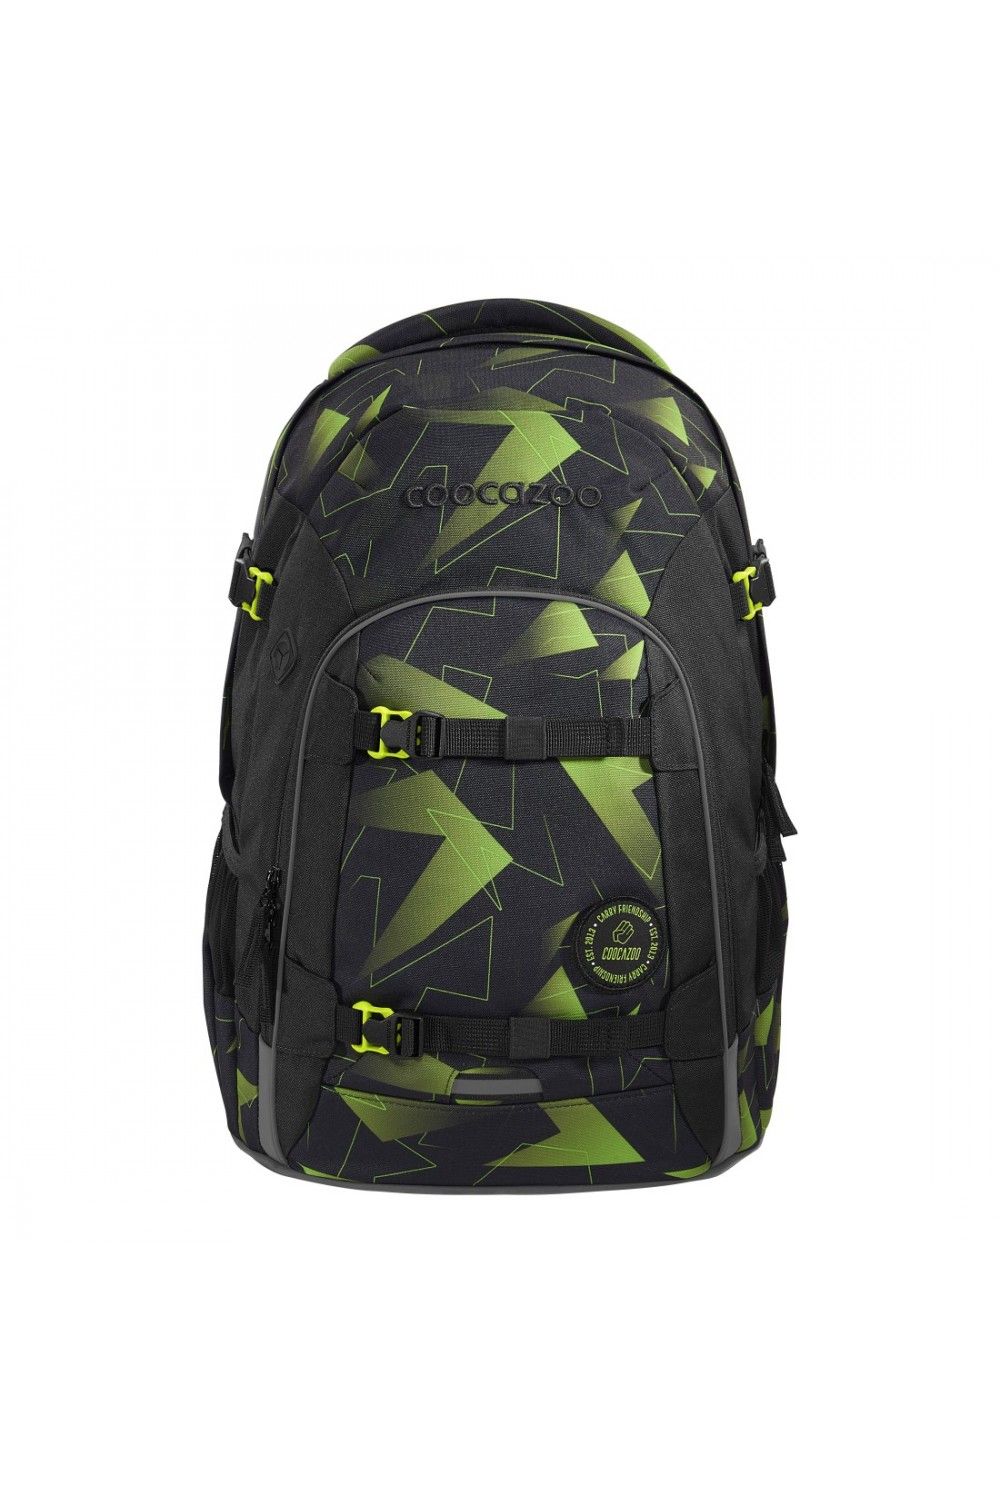 School backpack Coocazoo Joker Lime Flash